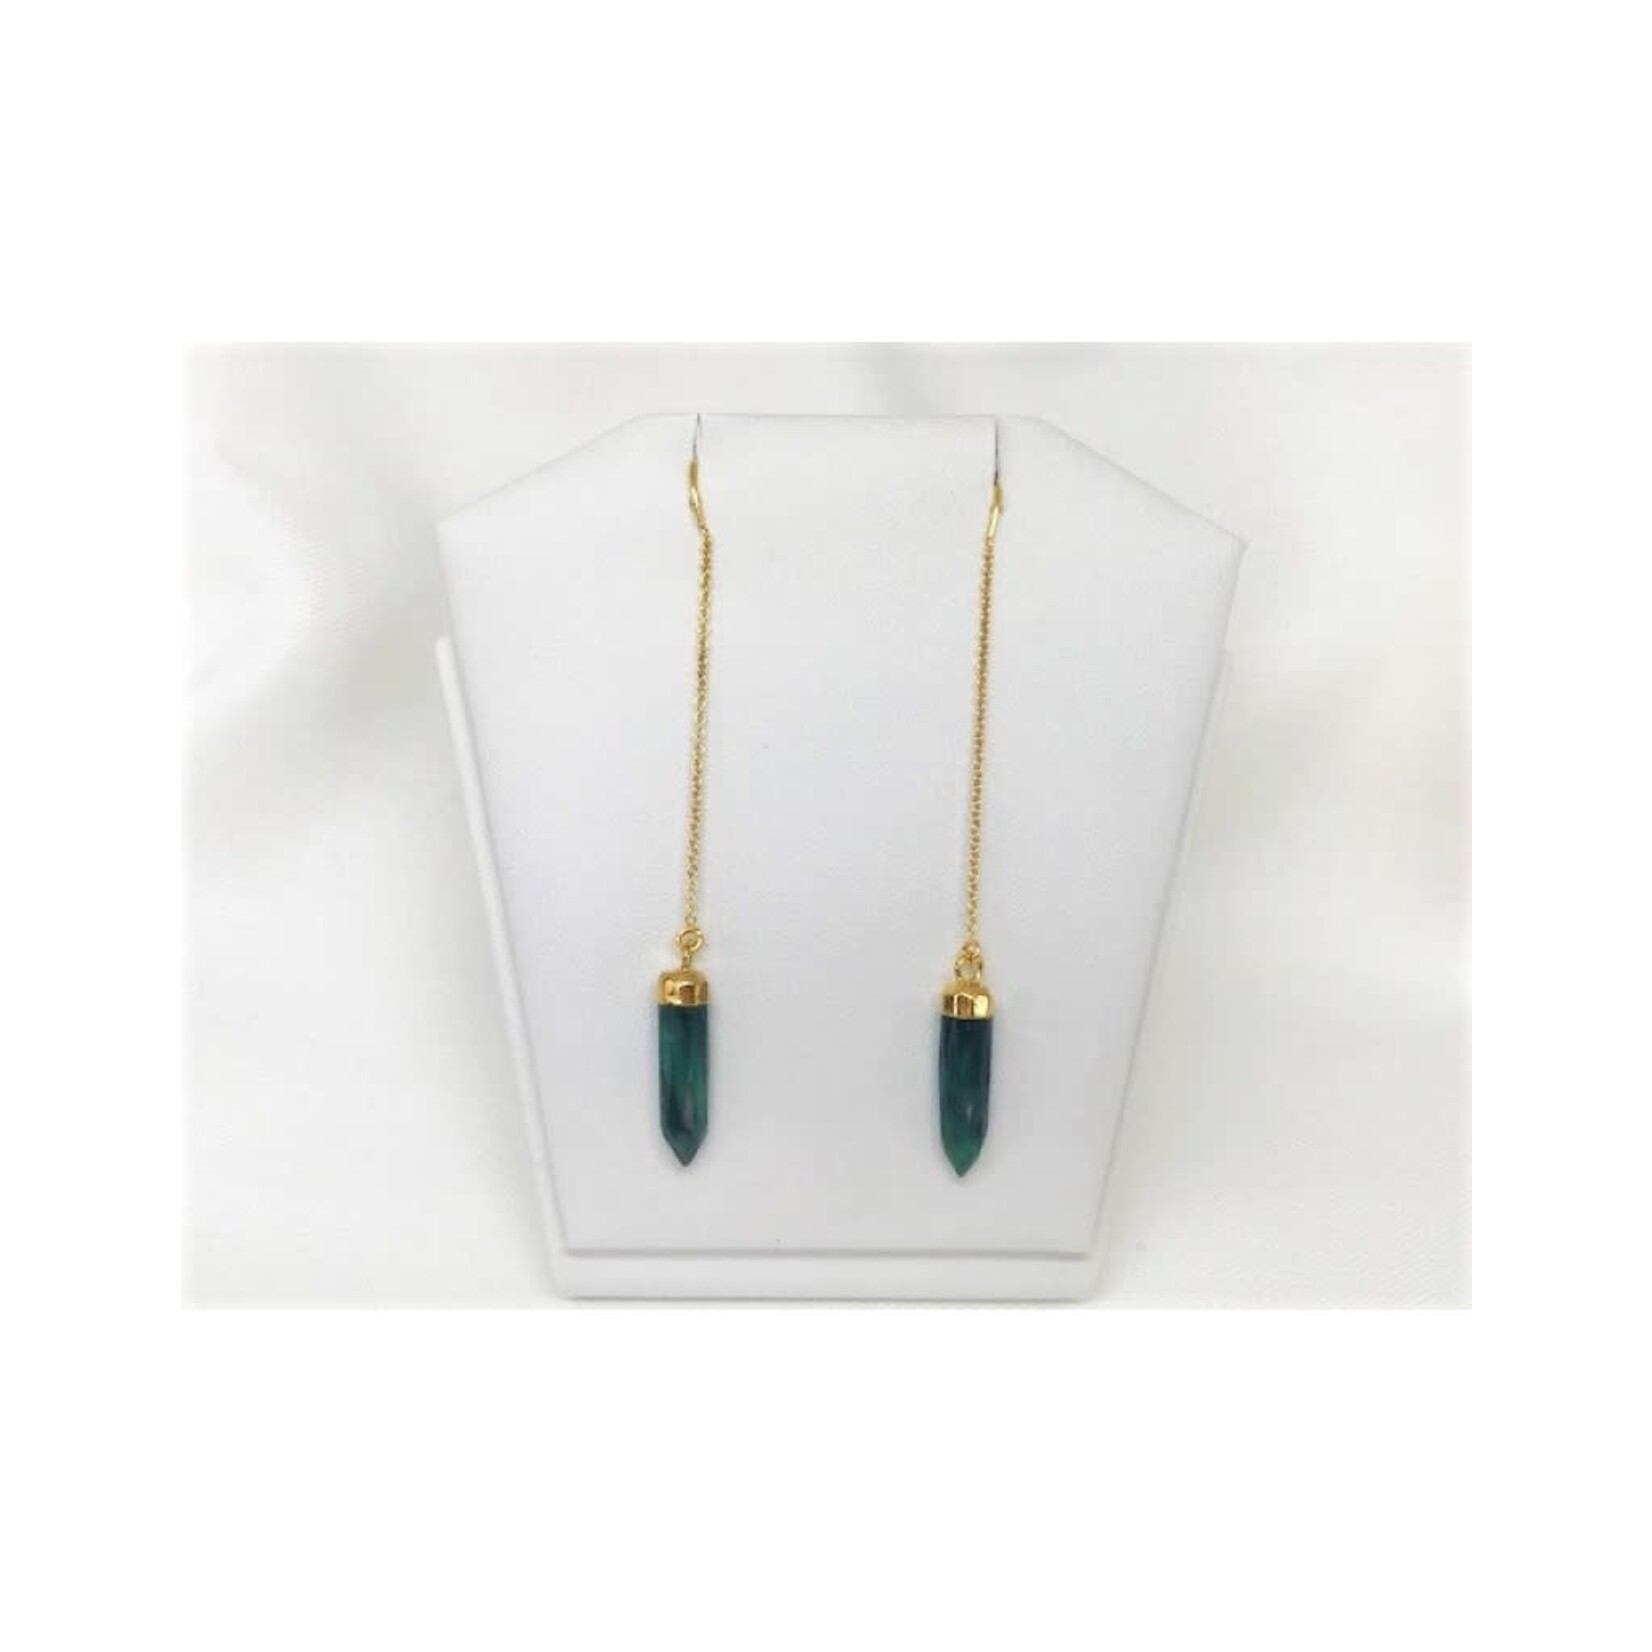 Thread Through Earrings - Raw Emerald/Gold